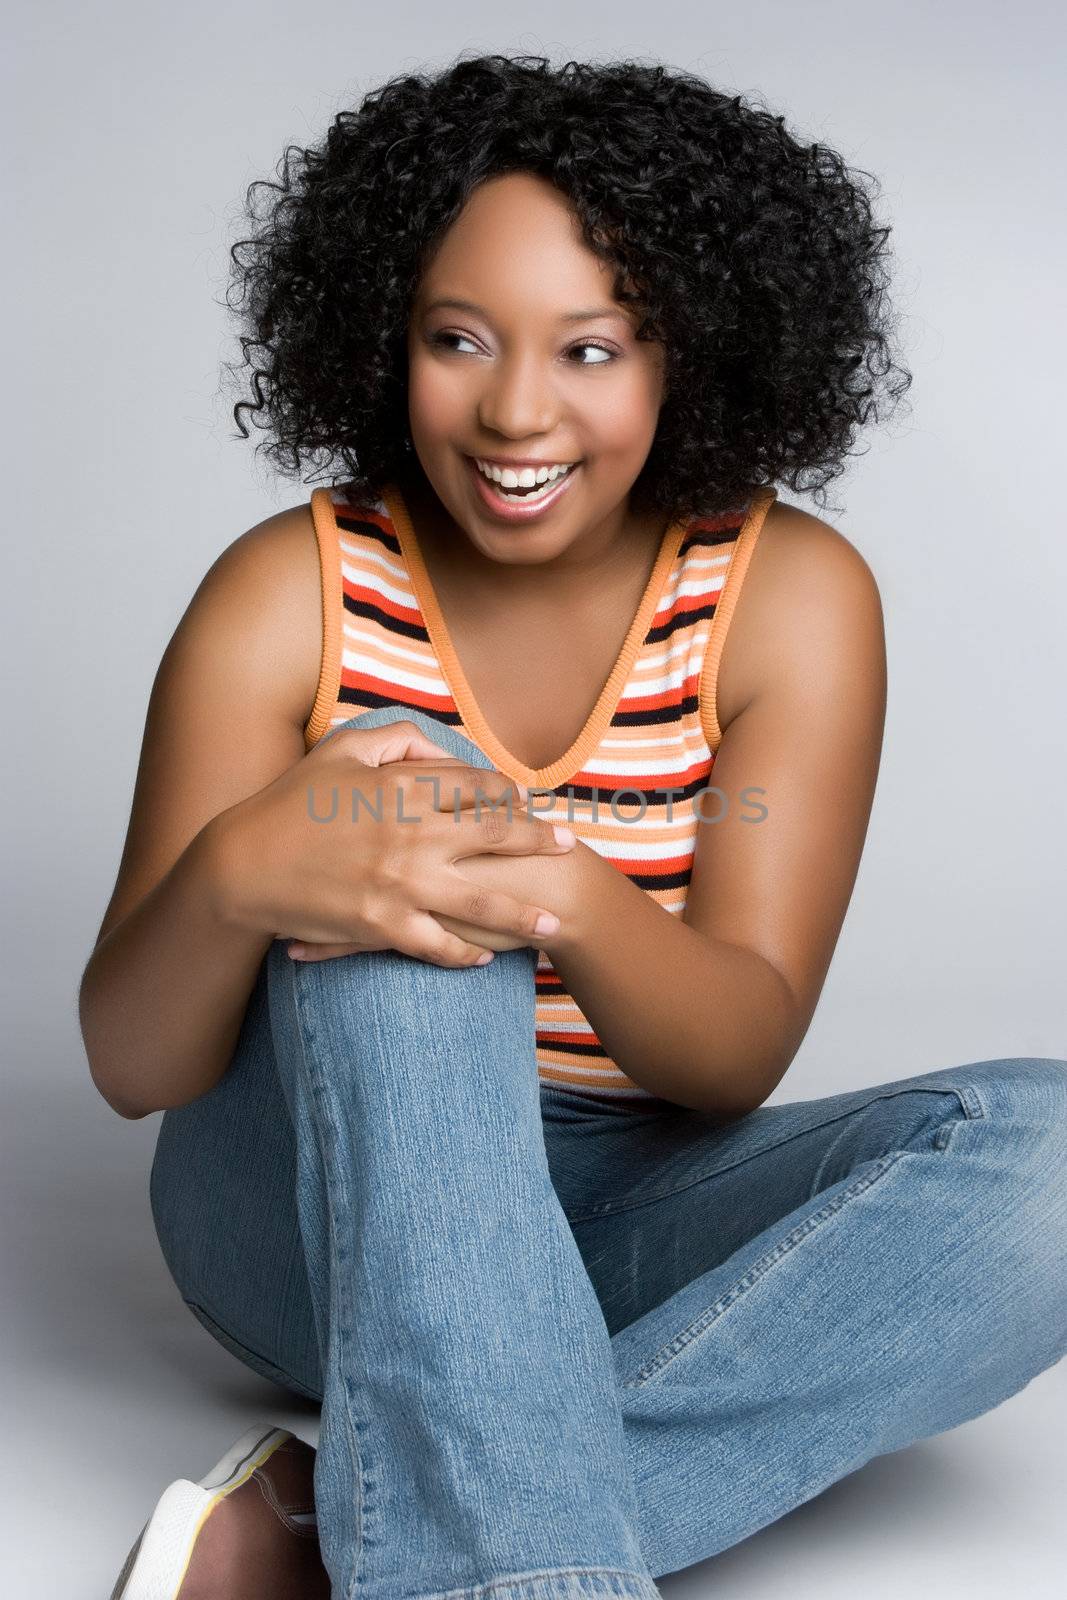 Beautiful young black woman laughing